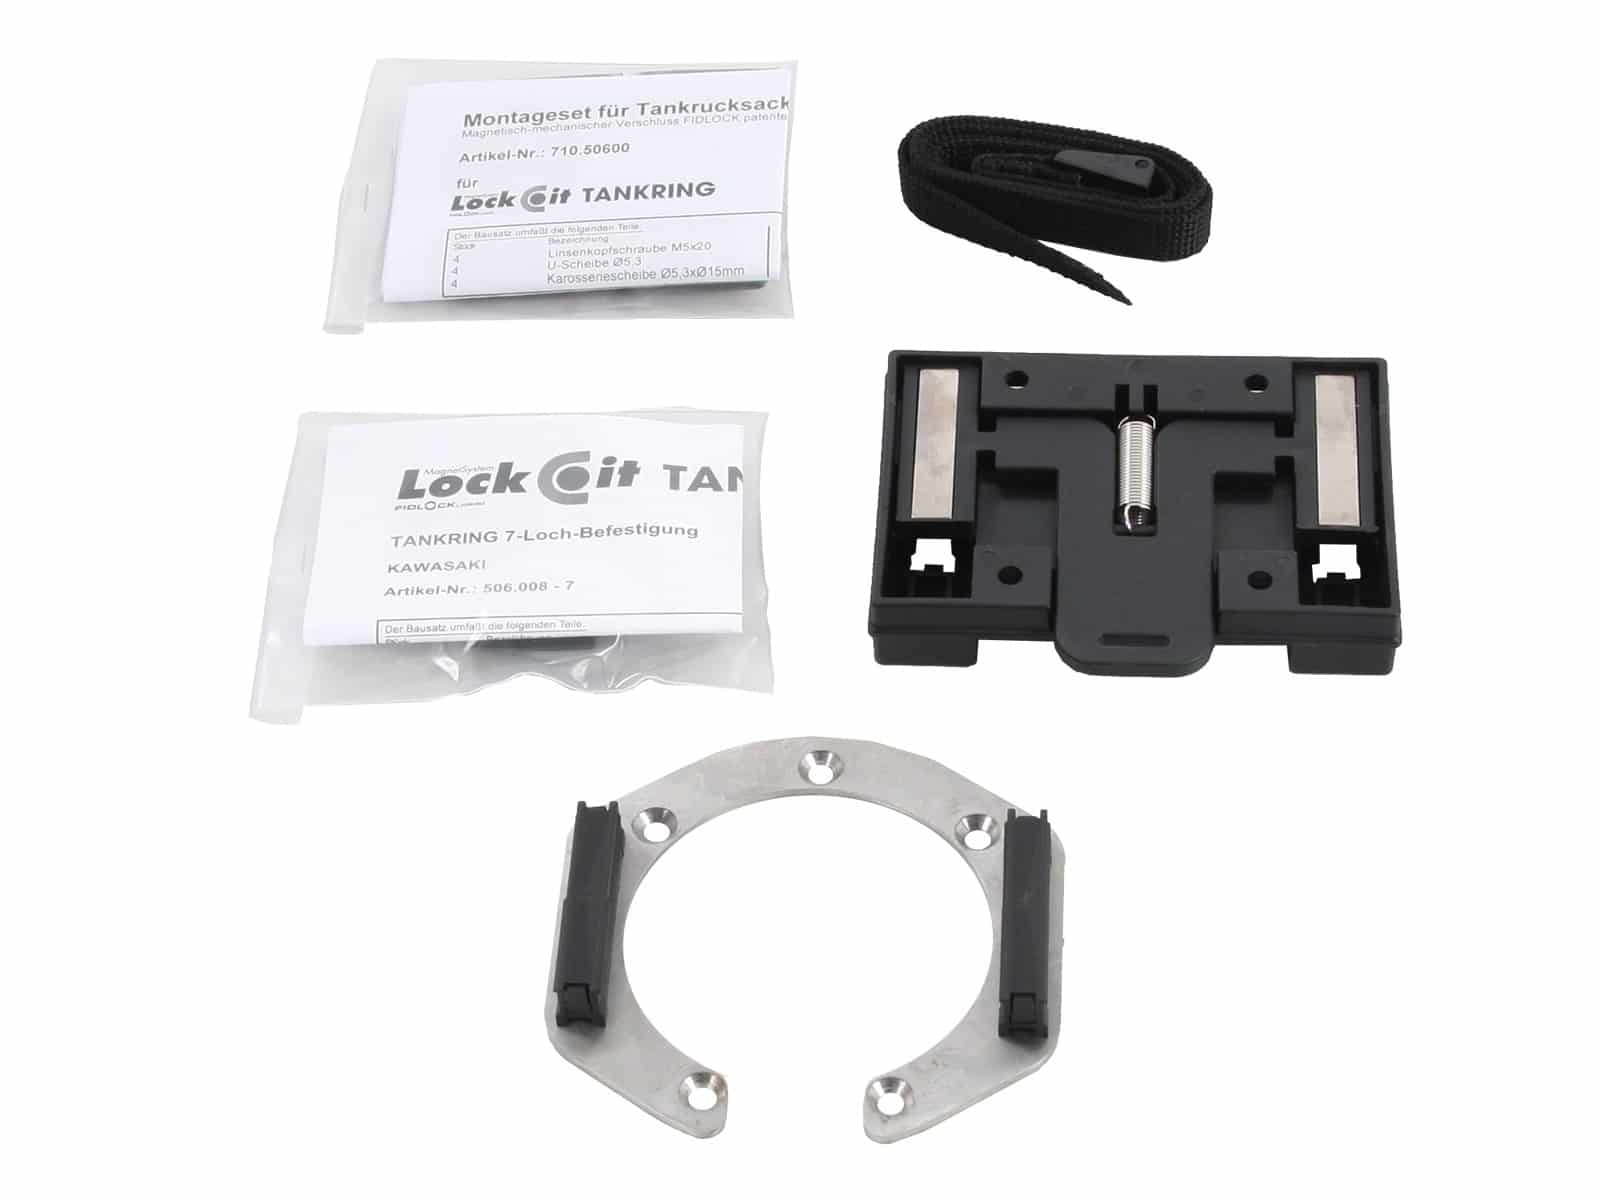 Tankring Lock-it incl. fastener for tankbag for Kawasaki GTR 1000 (1986-2003)